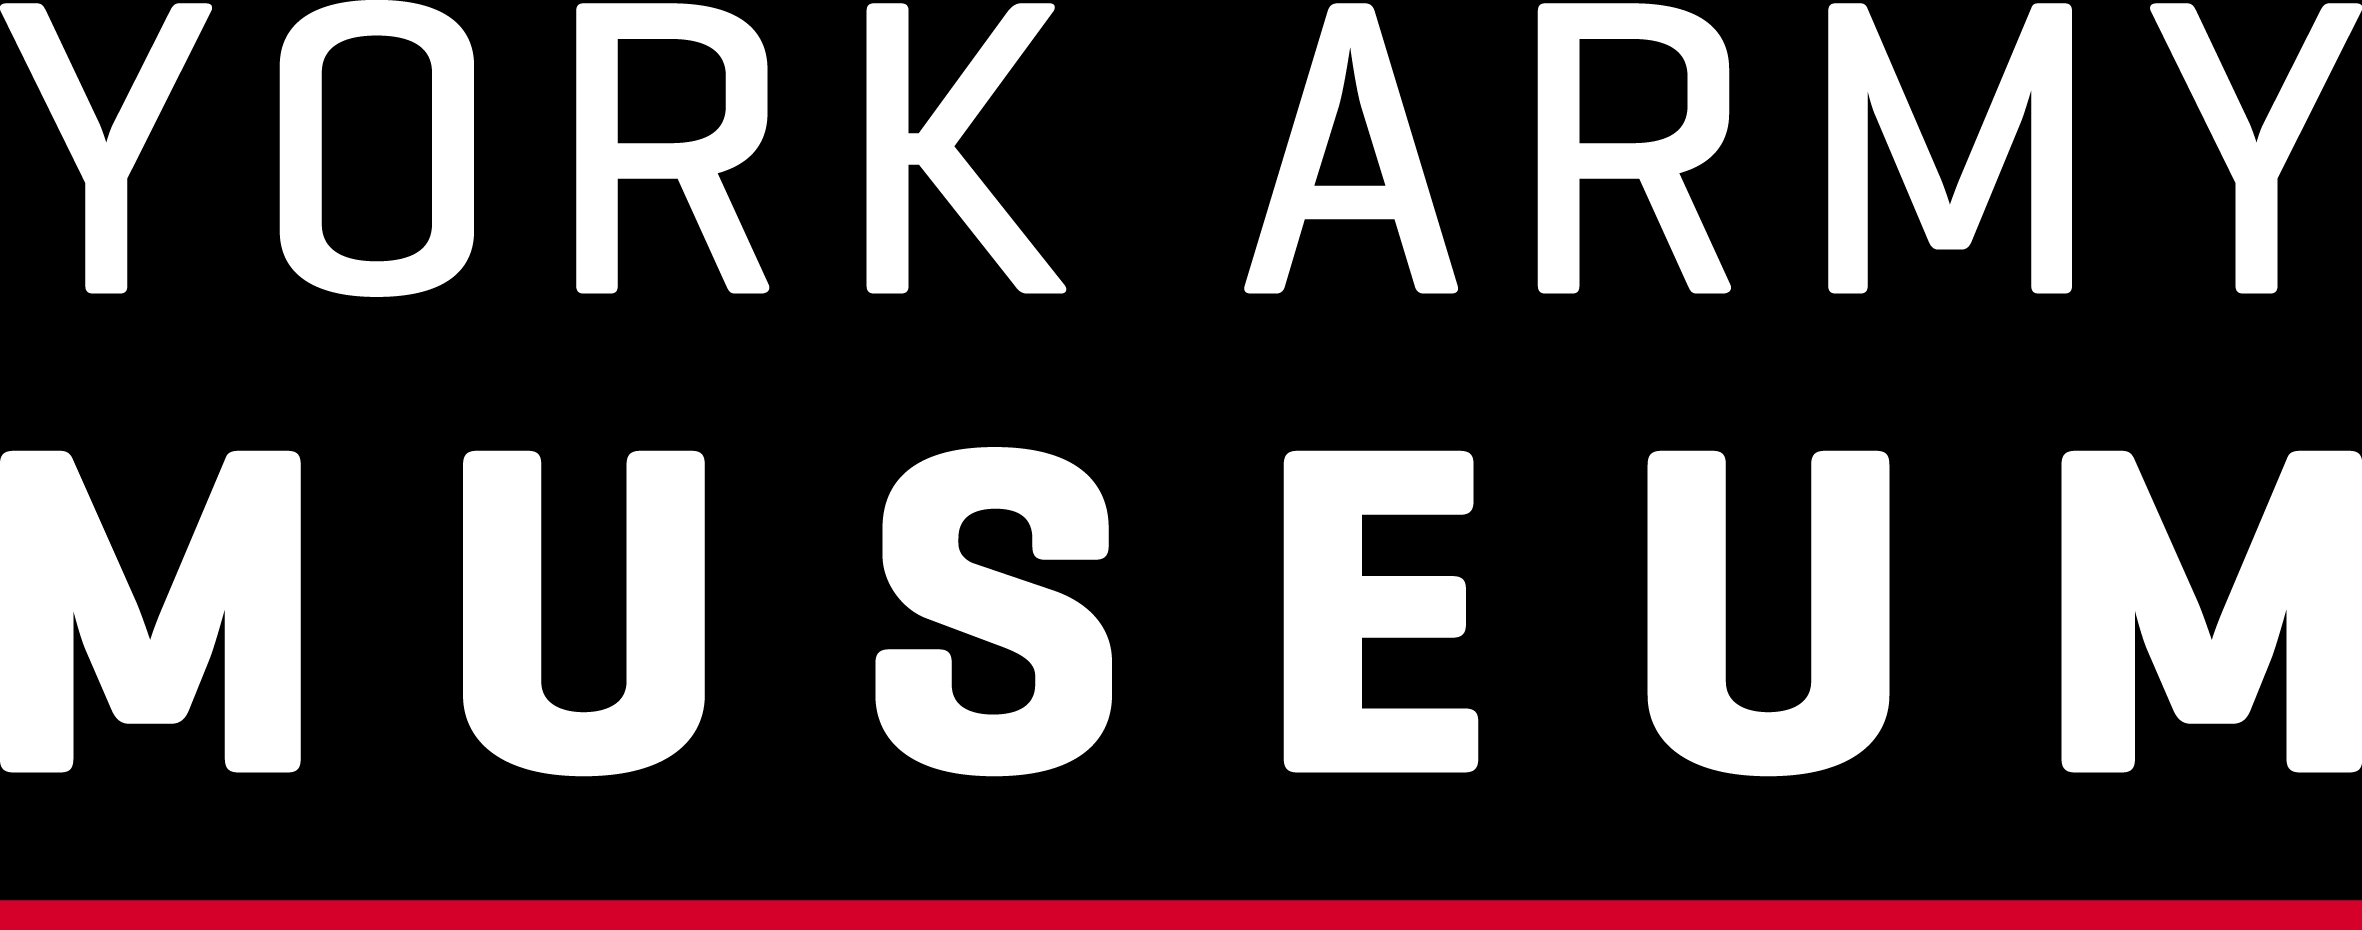 York Army Museum: Volunteer Makers Logo